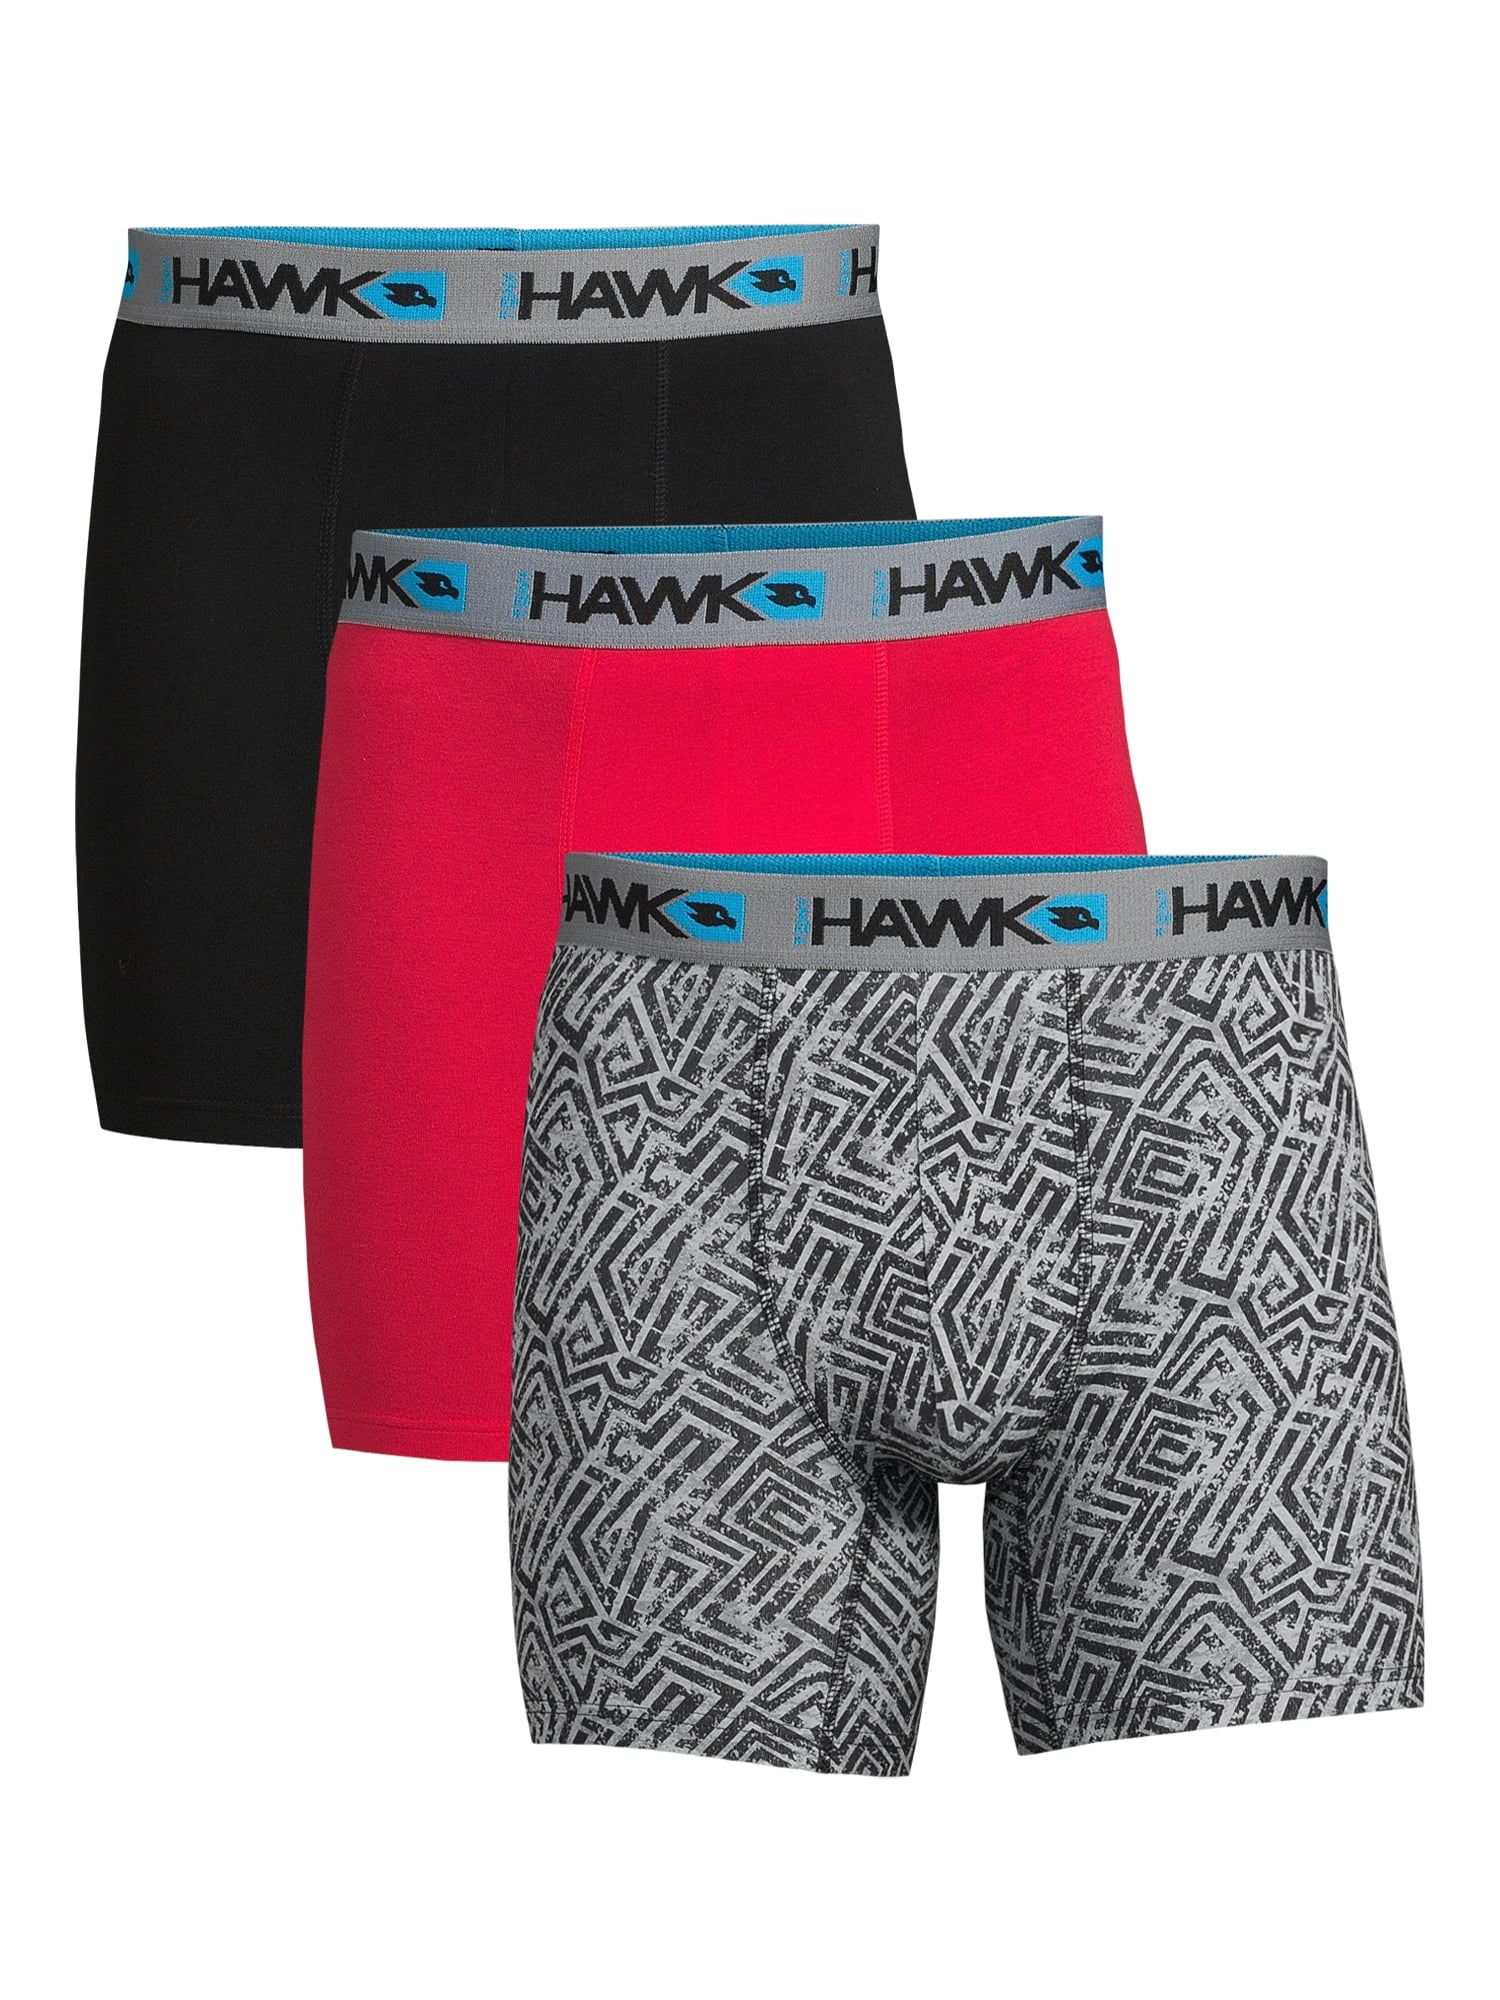 Details about   Men's underwear soft & lightweight cool comfort 4pk Hanes Comfort Blend briefs 